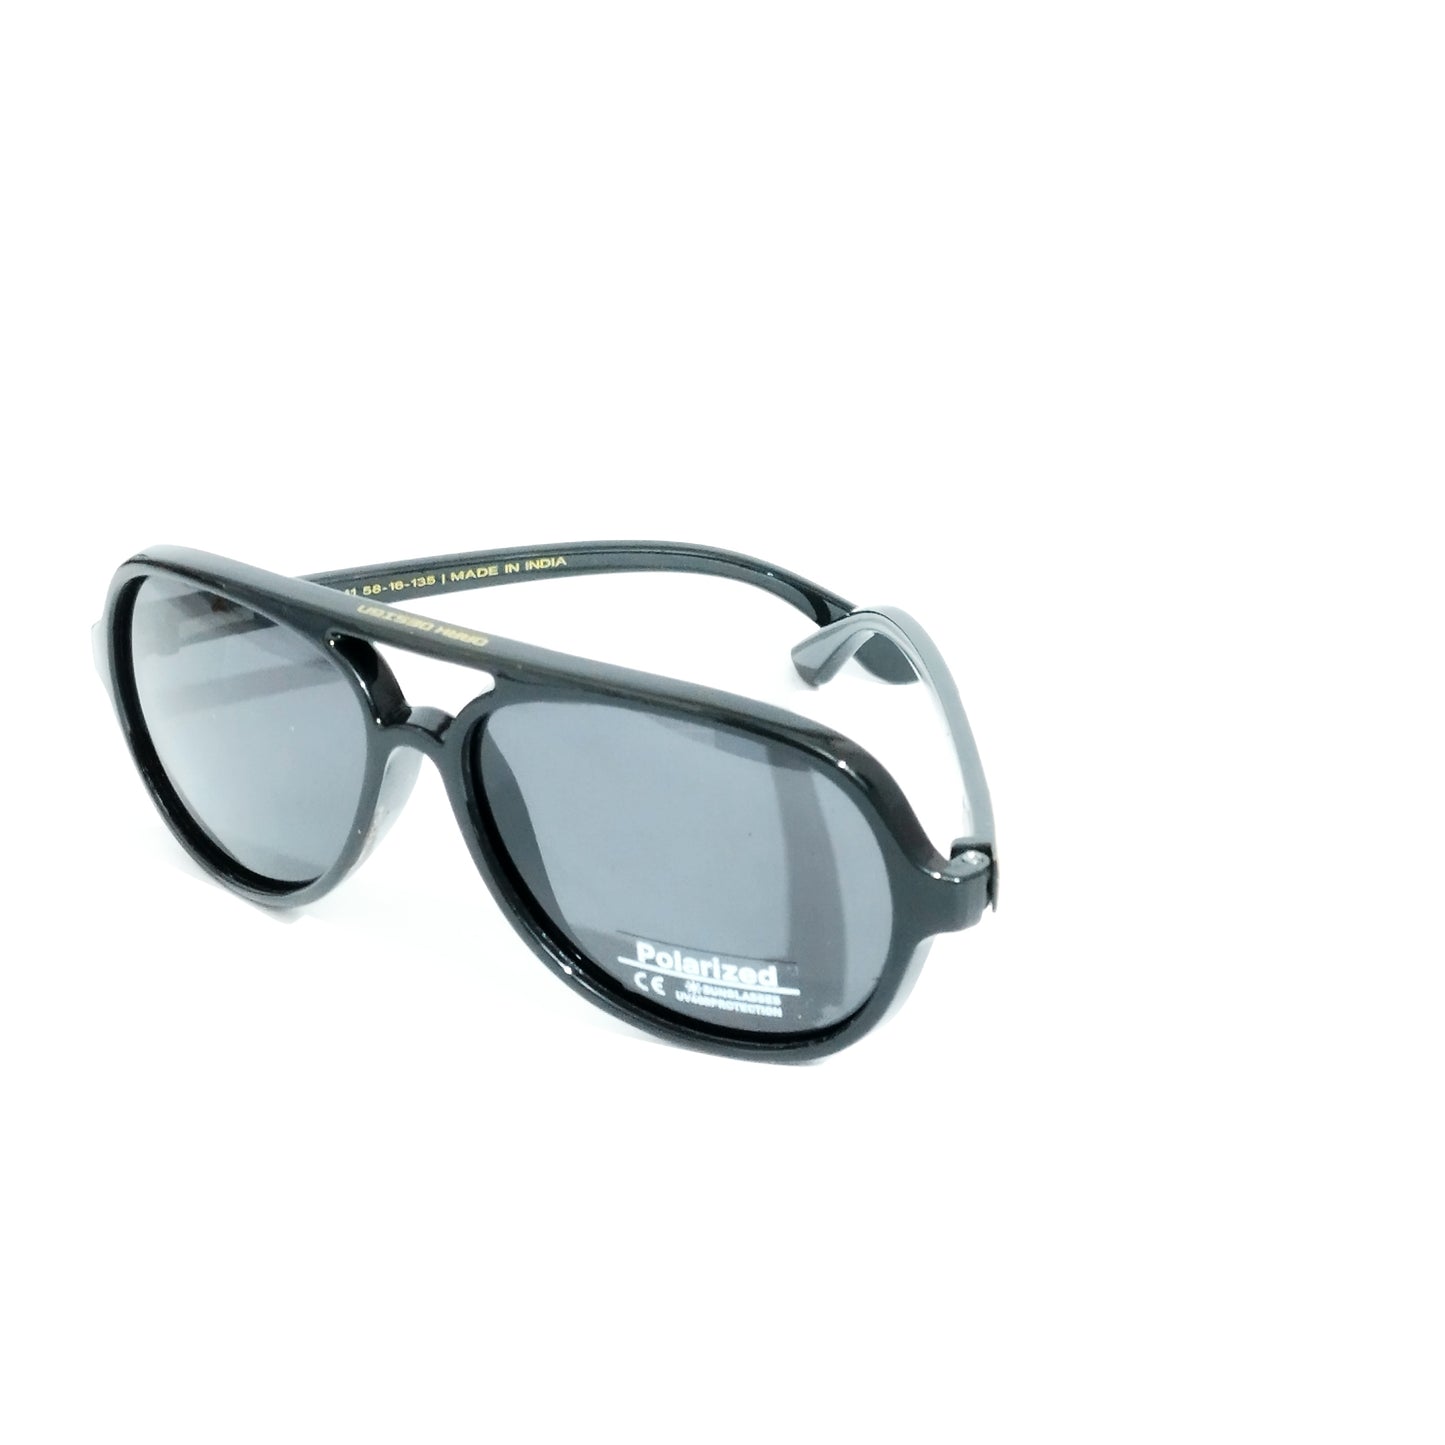 Black Aerodynamic Shape Polarized Sunglasses for Men and Women